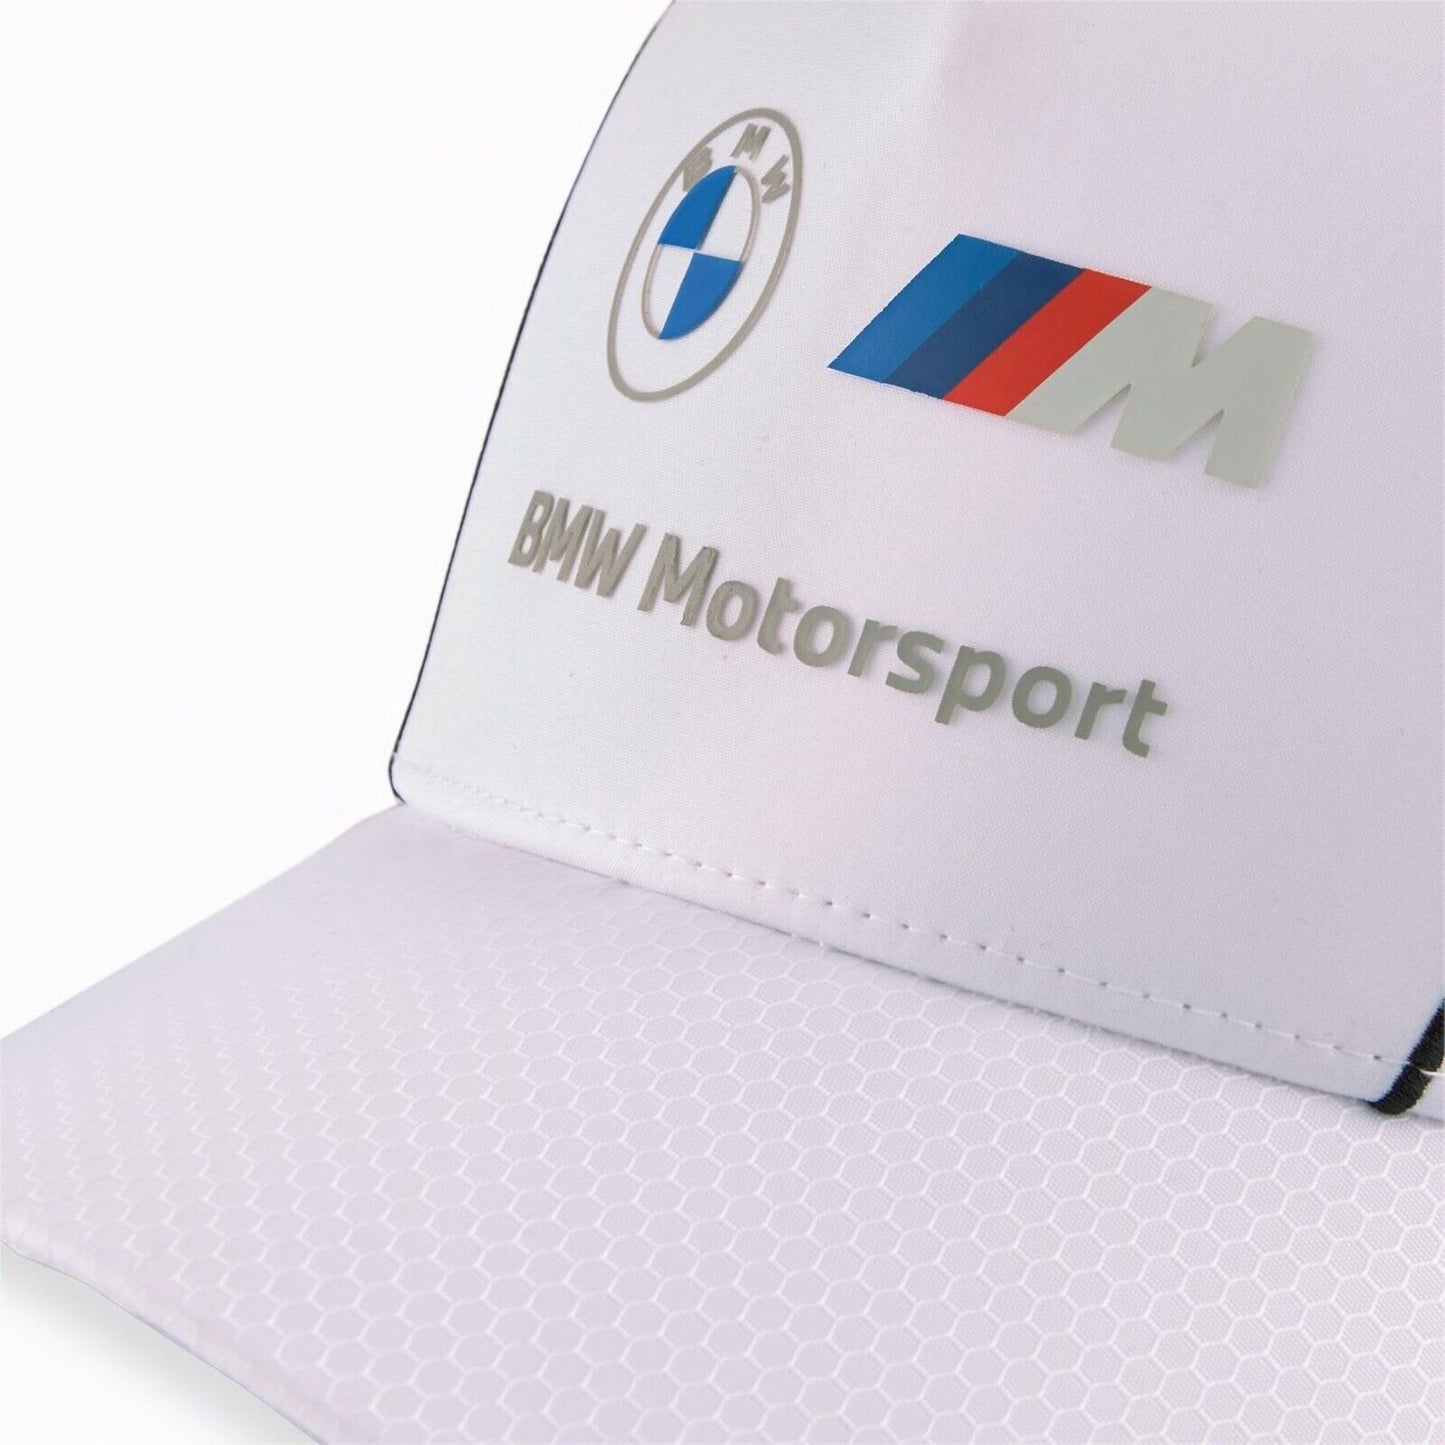 Official BMW M Motorsport White Baseball Cap - 023743 02